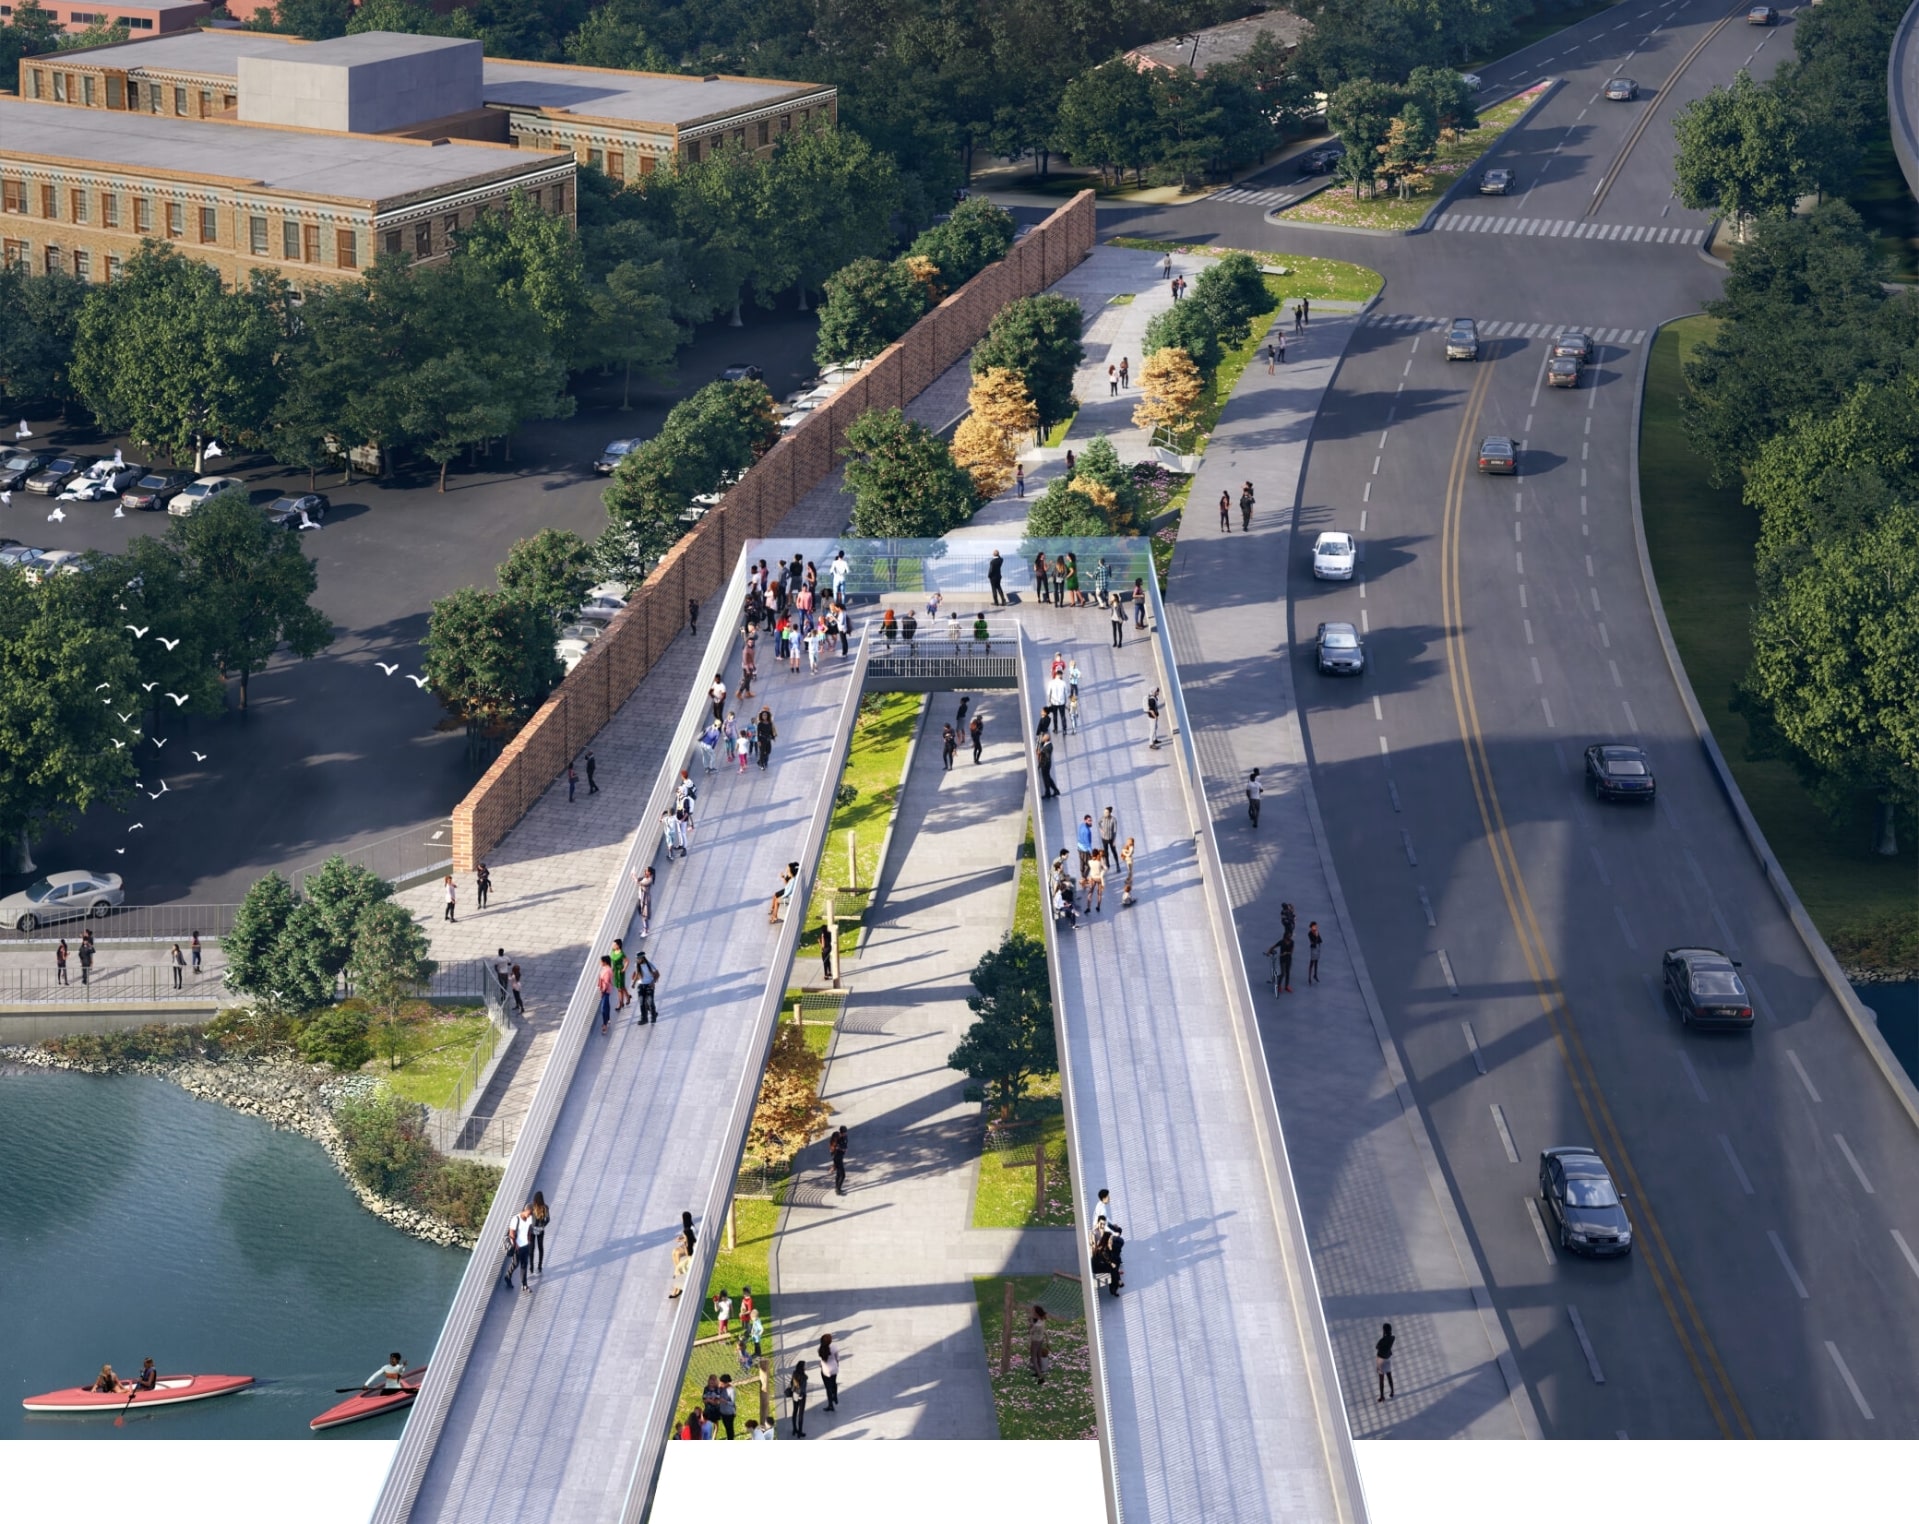 An artist's rendering of a pedestrian bridge over a river, showcasing the vibrant 11th Street Bridge Park that unites recreation and art.